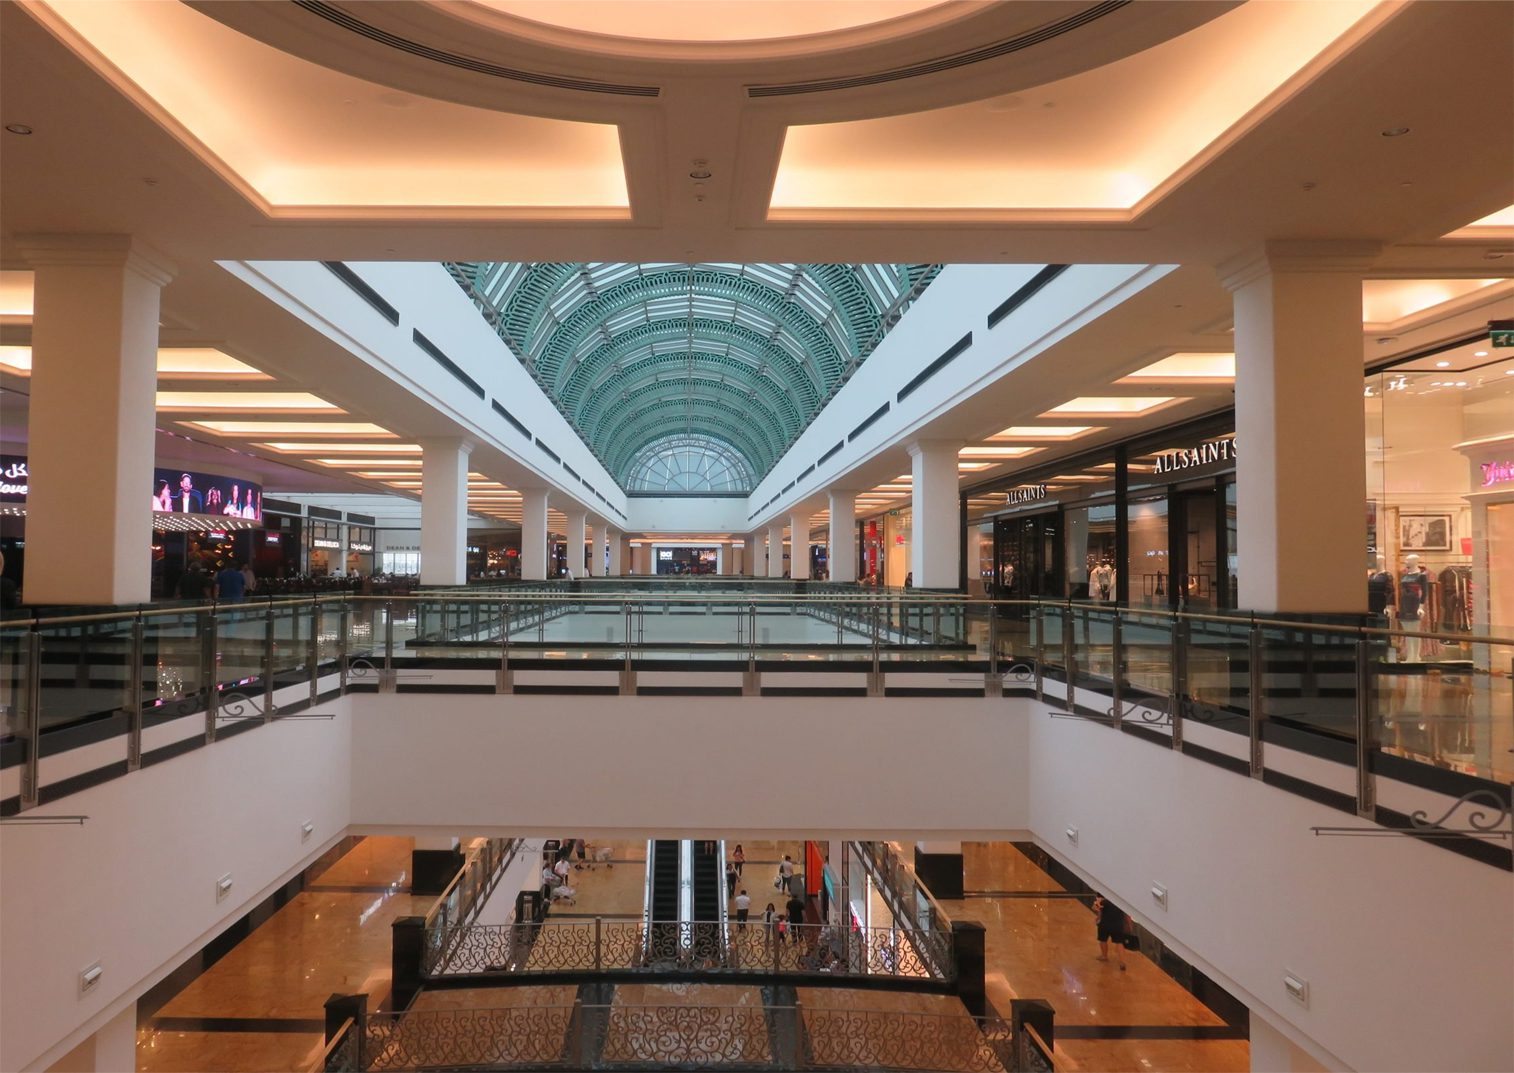 kriaan shopping mall interiors